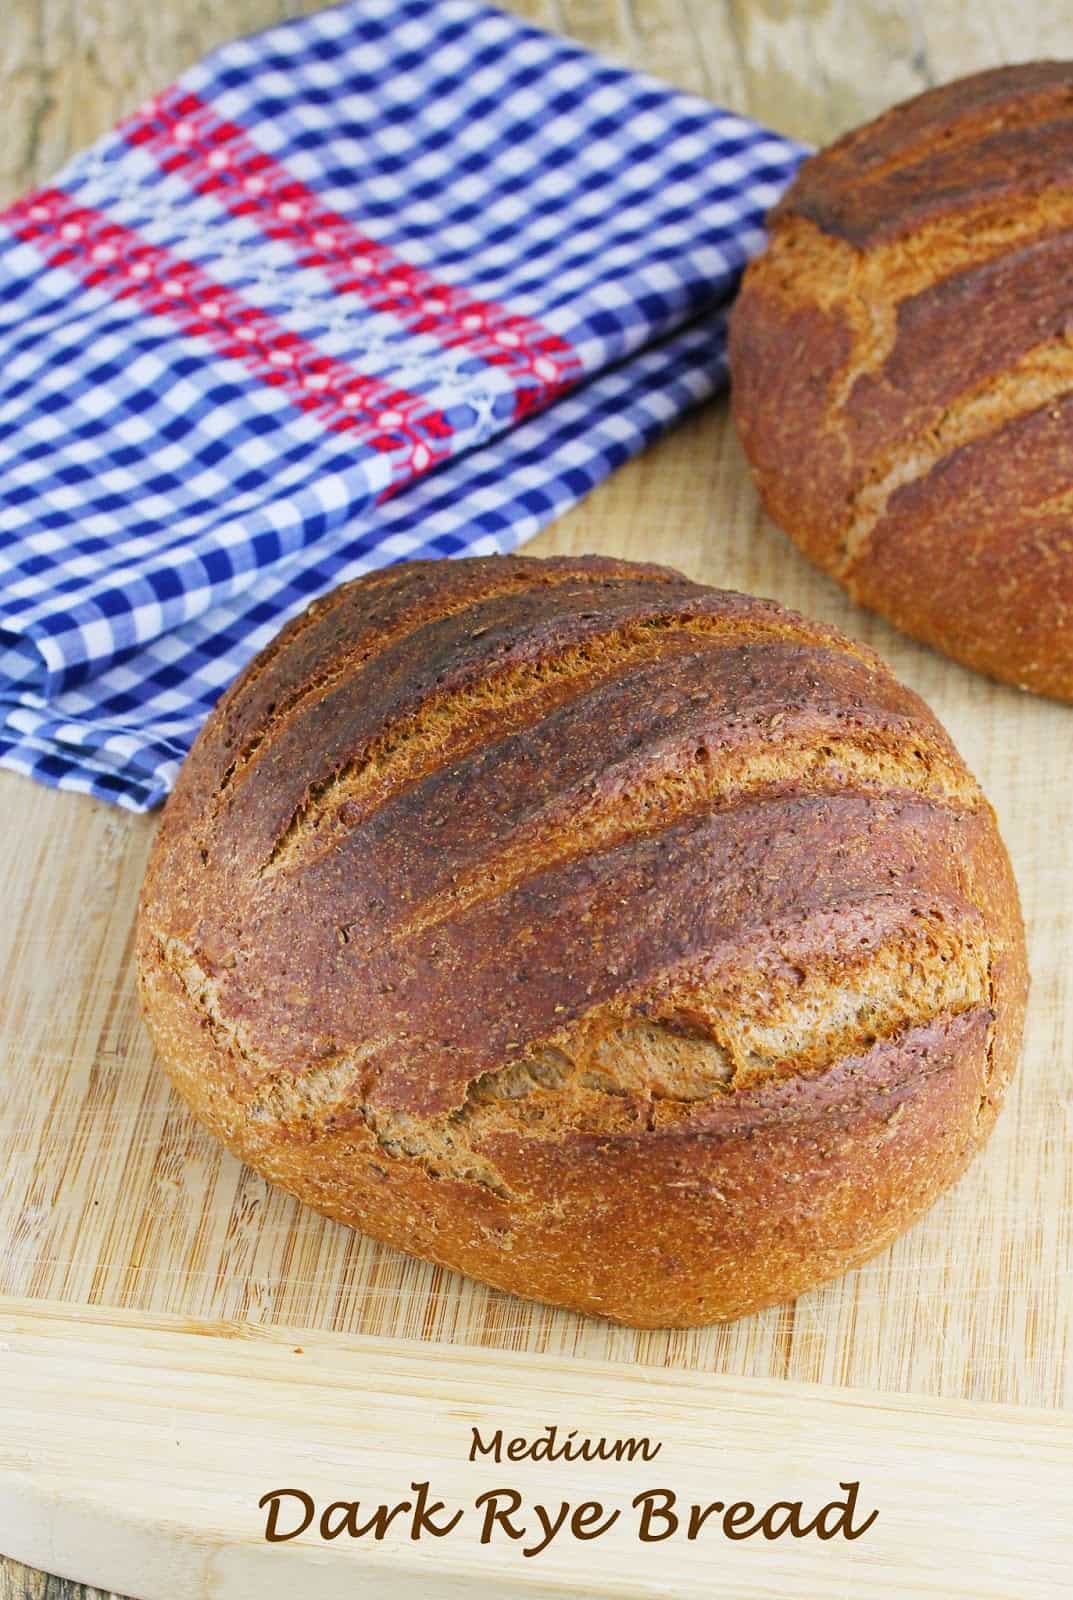 Medium Dark Rye Bread: Loaves of freshly baked rye bread on a cutting board with a tea towel